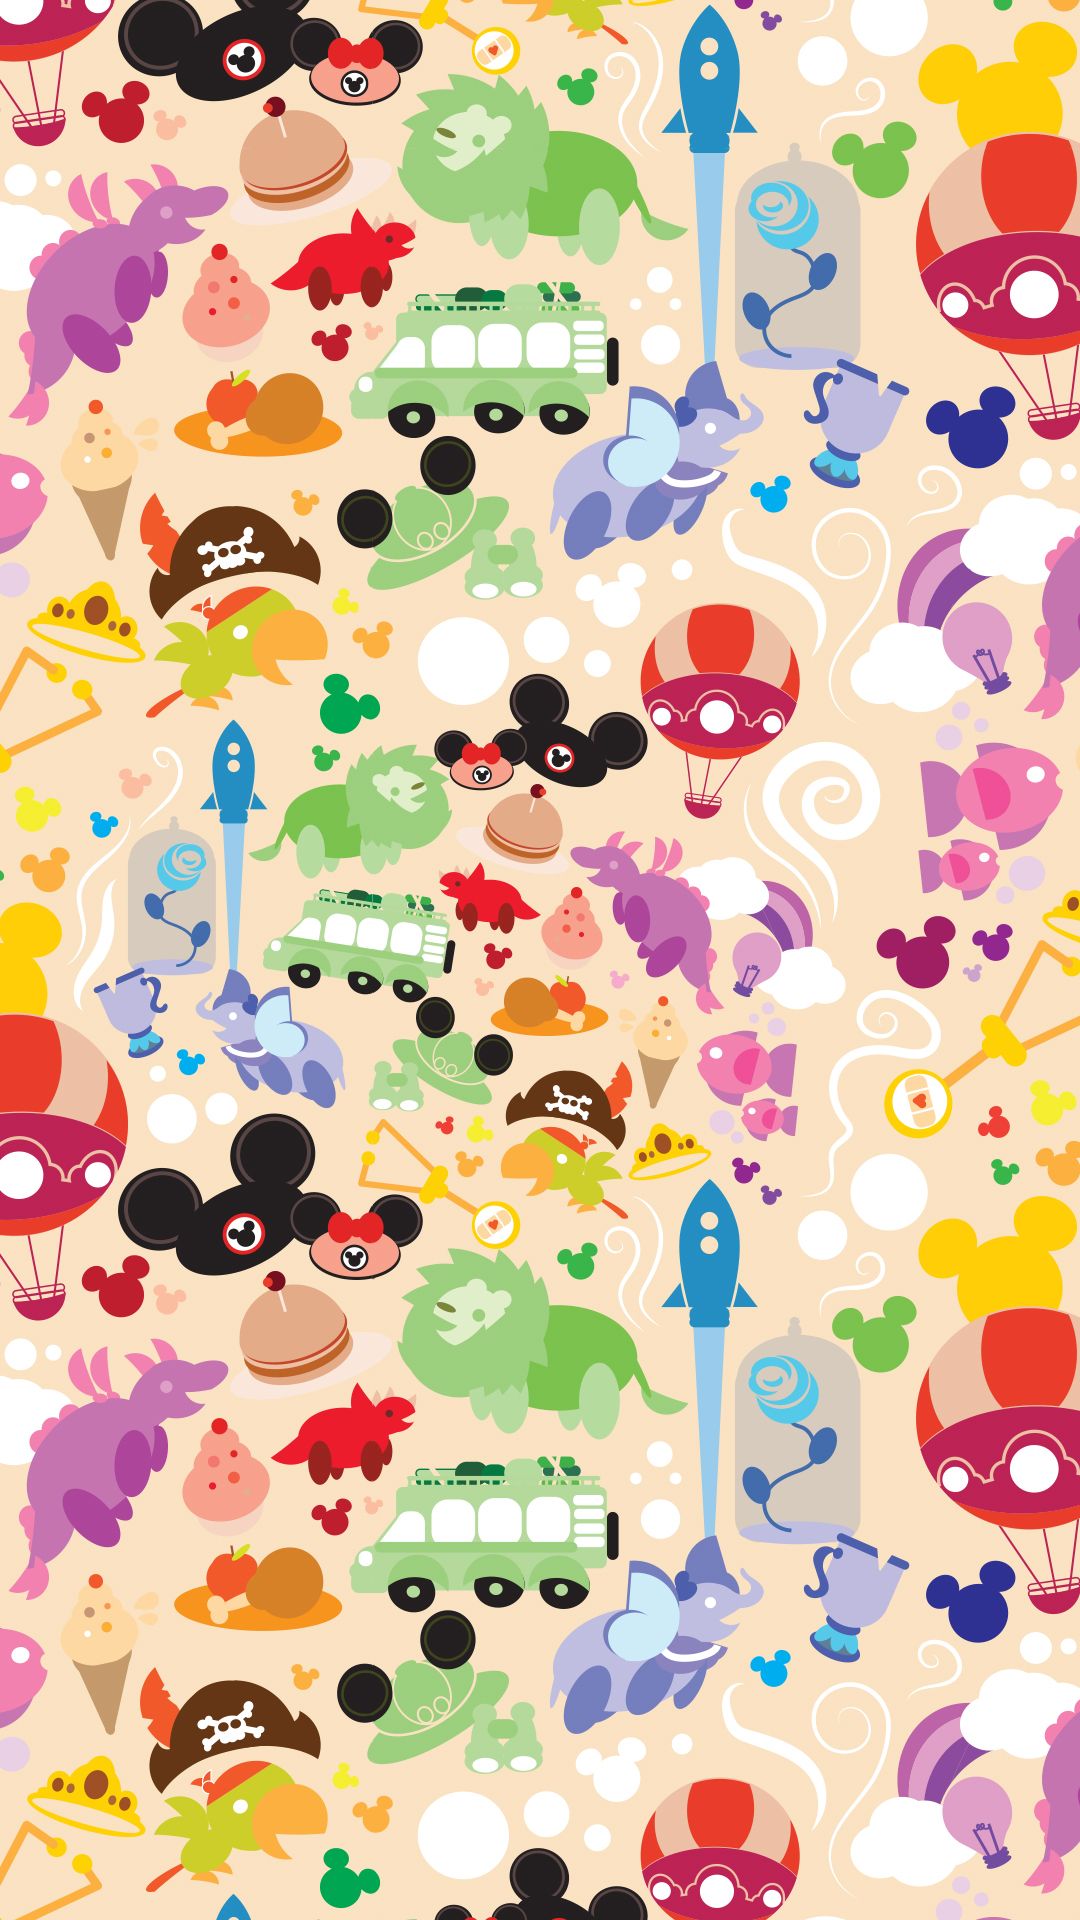 DisneyKids: Download Our Playful Walt Disney World Resort